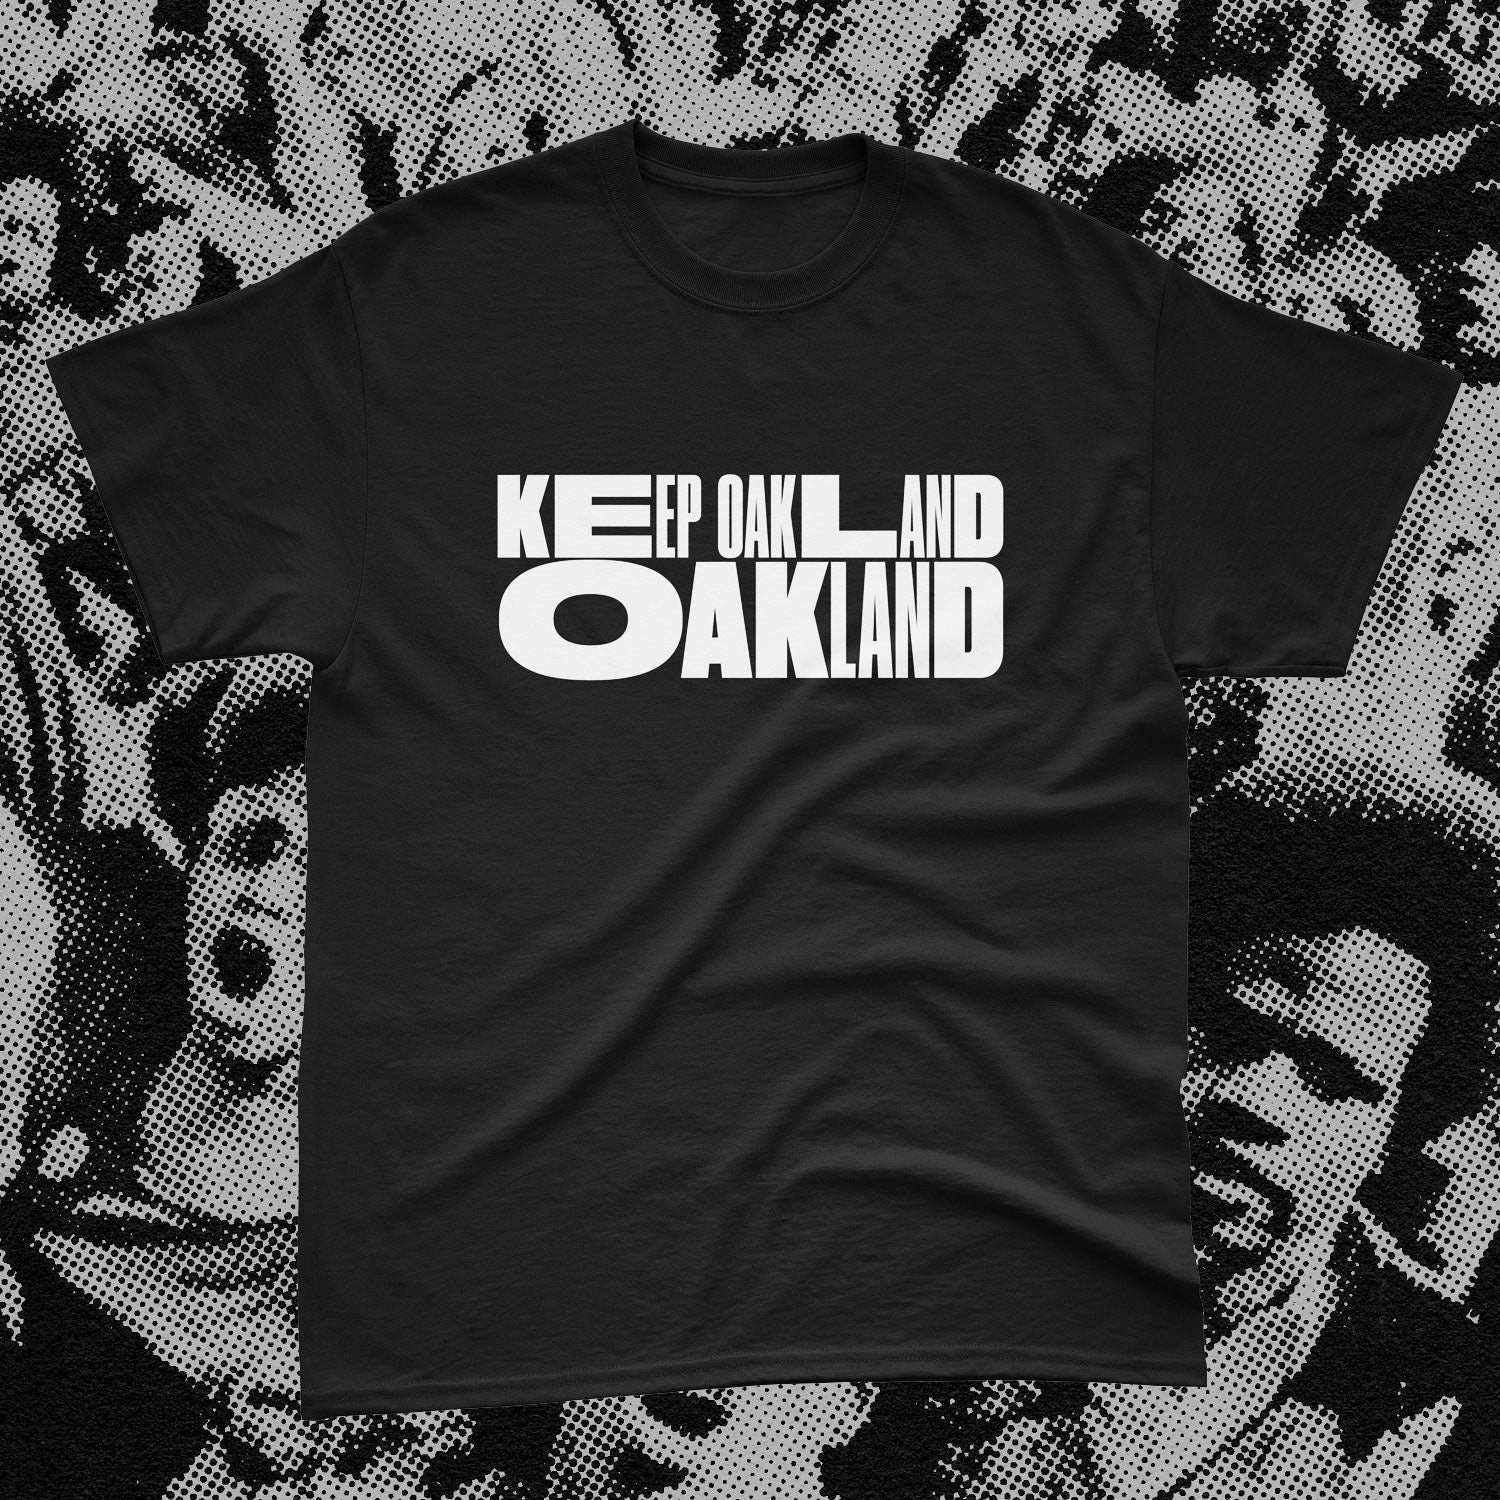 Keeping Oakland Oakland: Short Sleeve